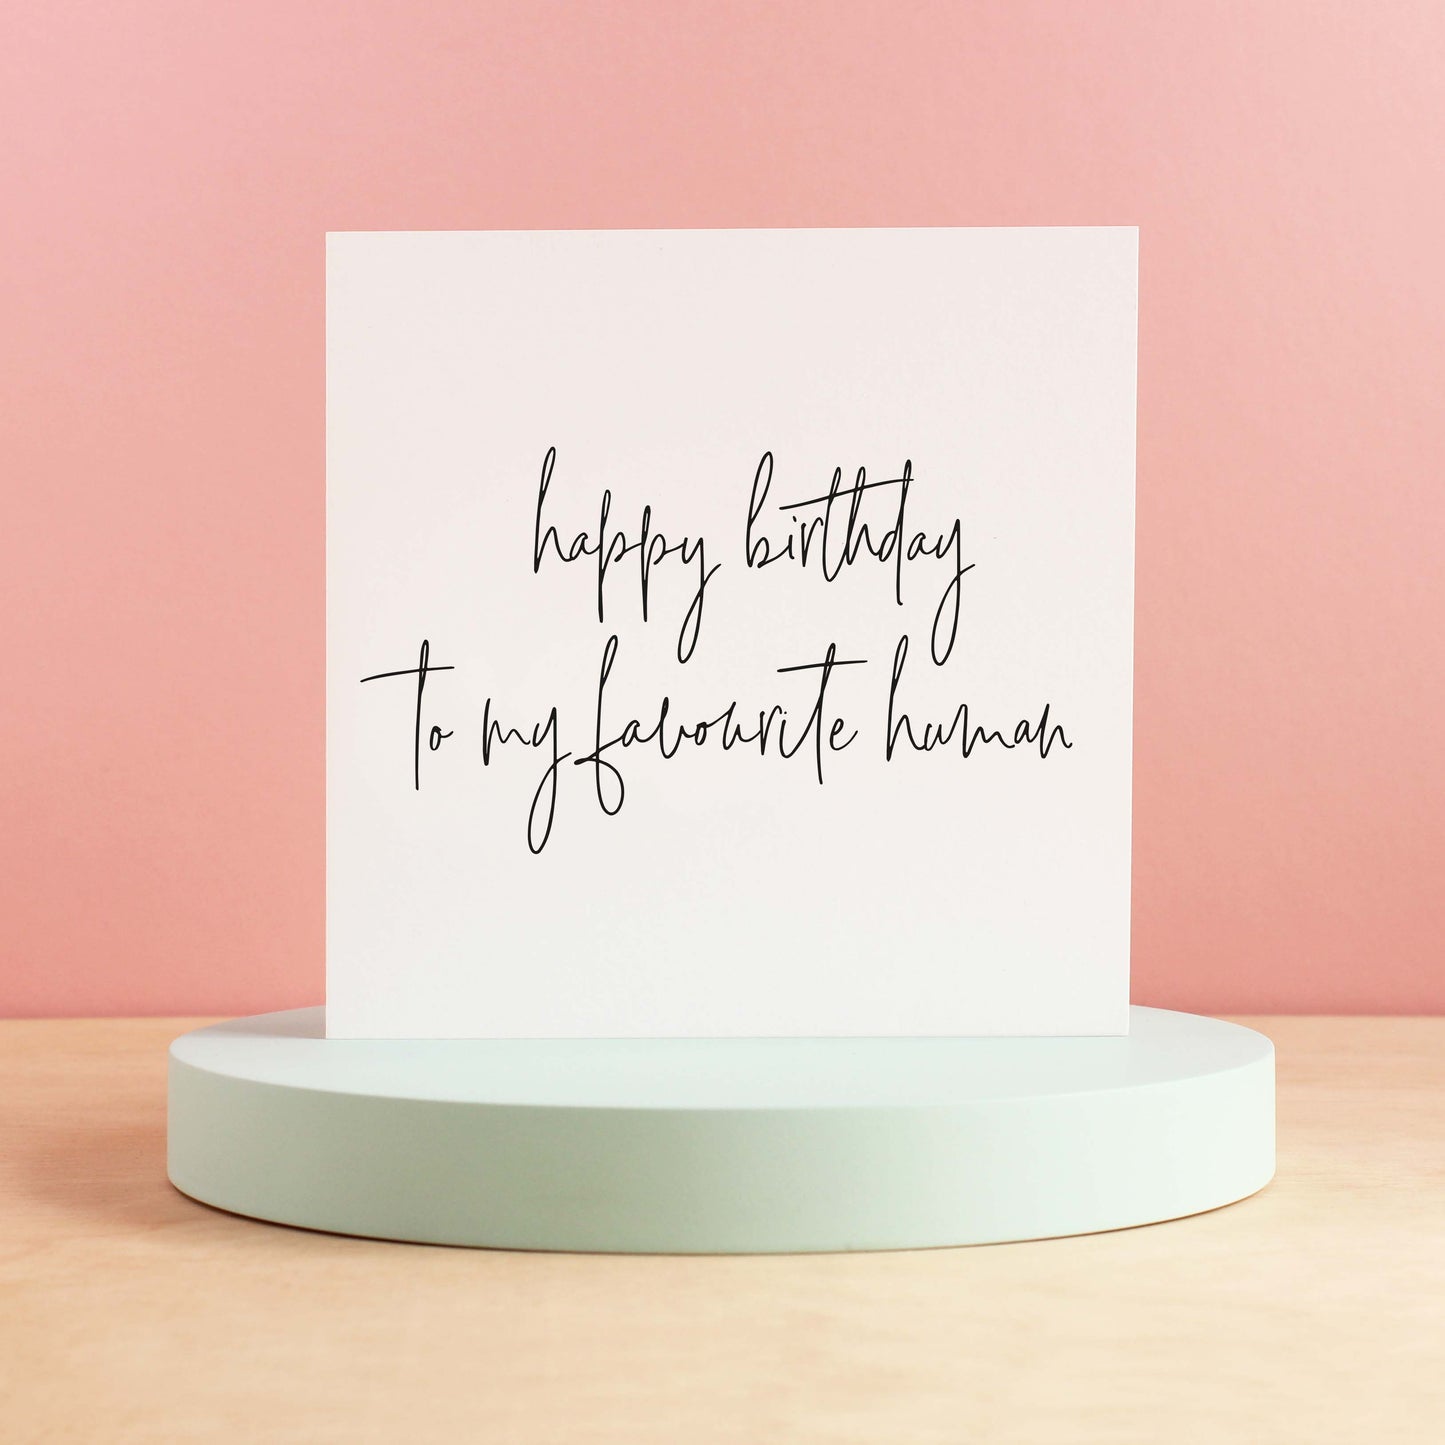 Favourite human birthday card from Purple Tree Designs